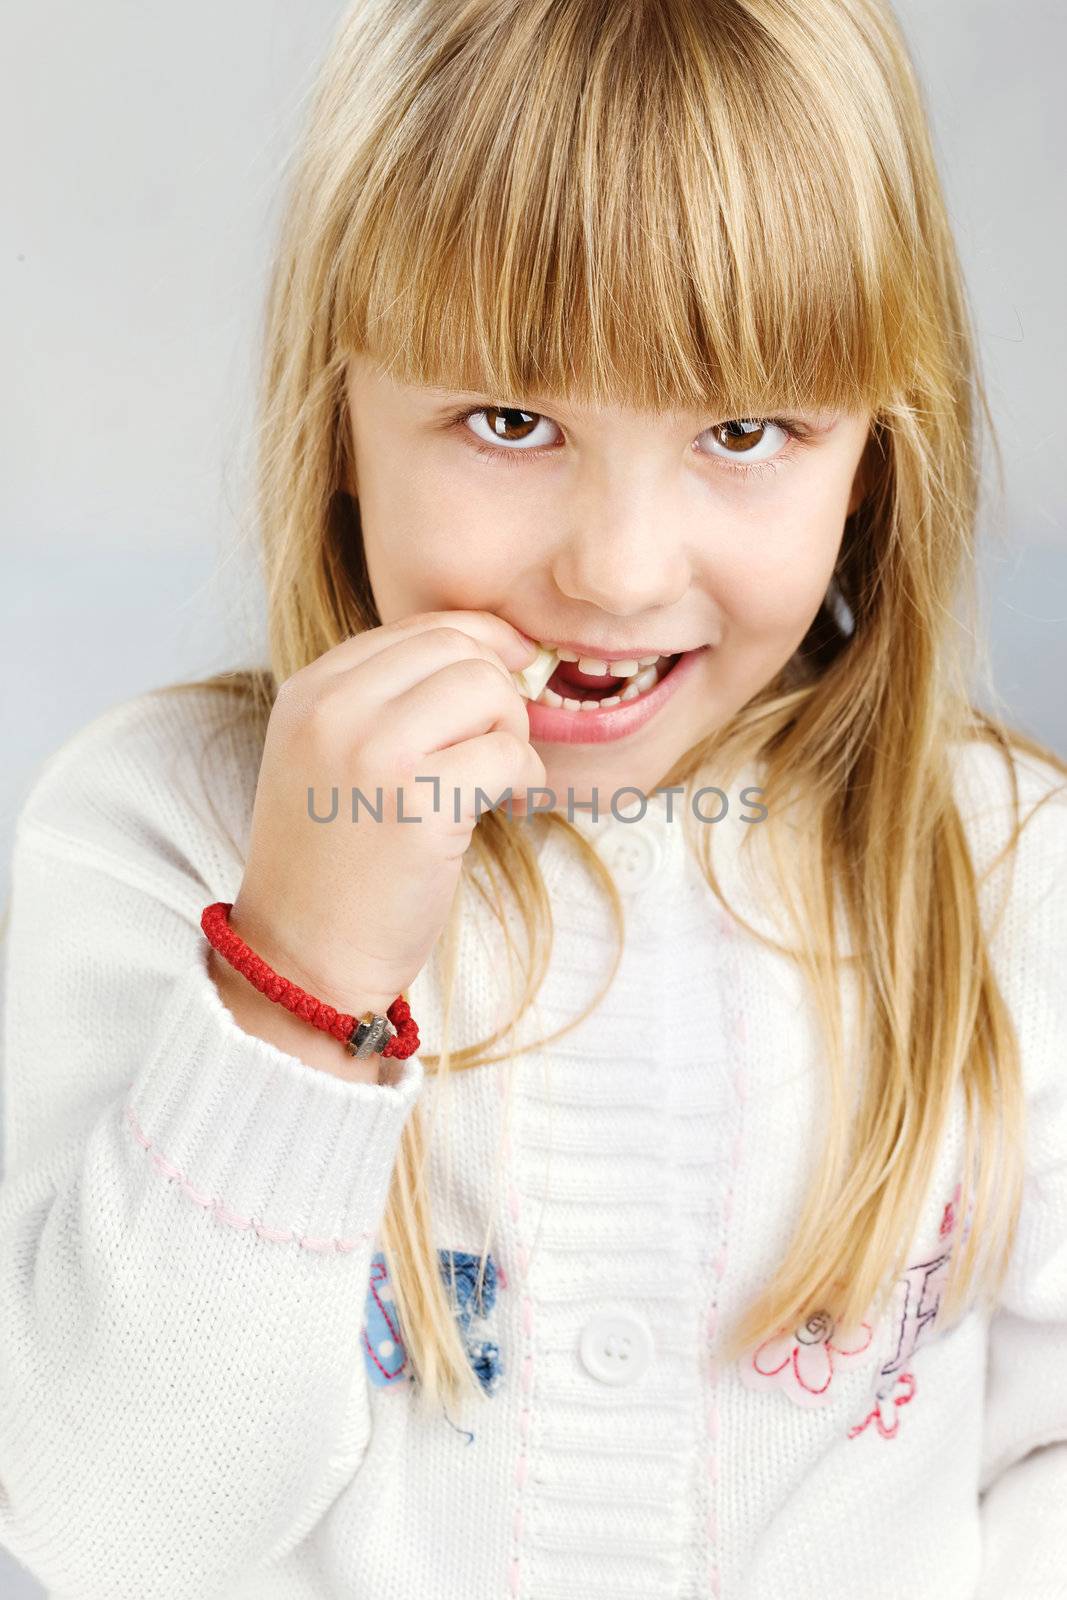 Blue hair girl eating candy